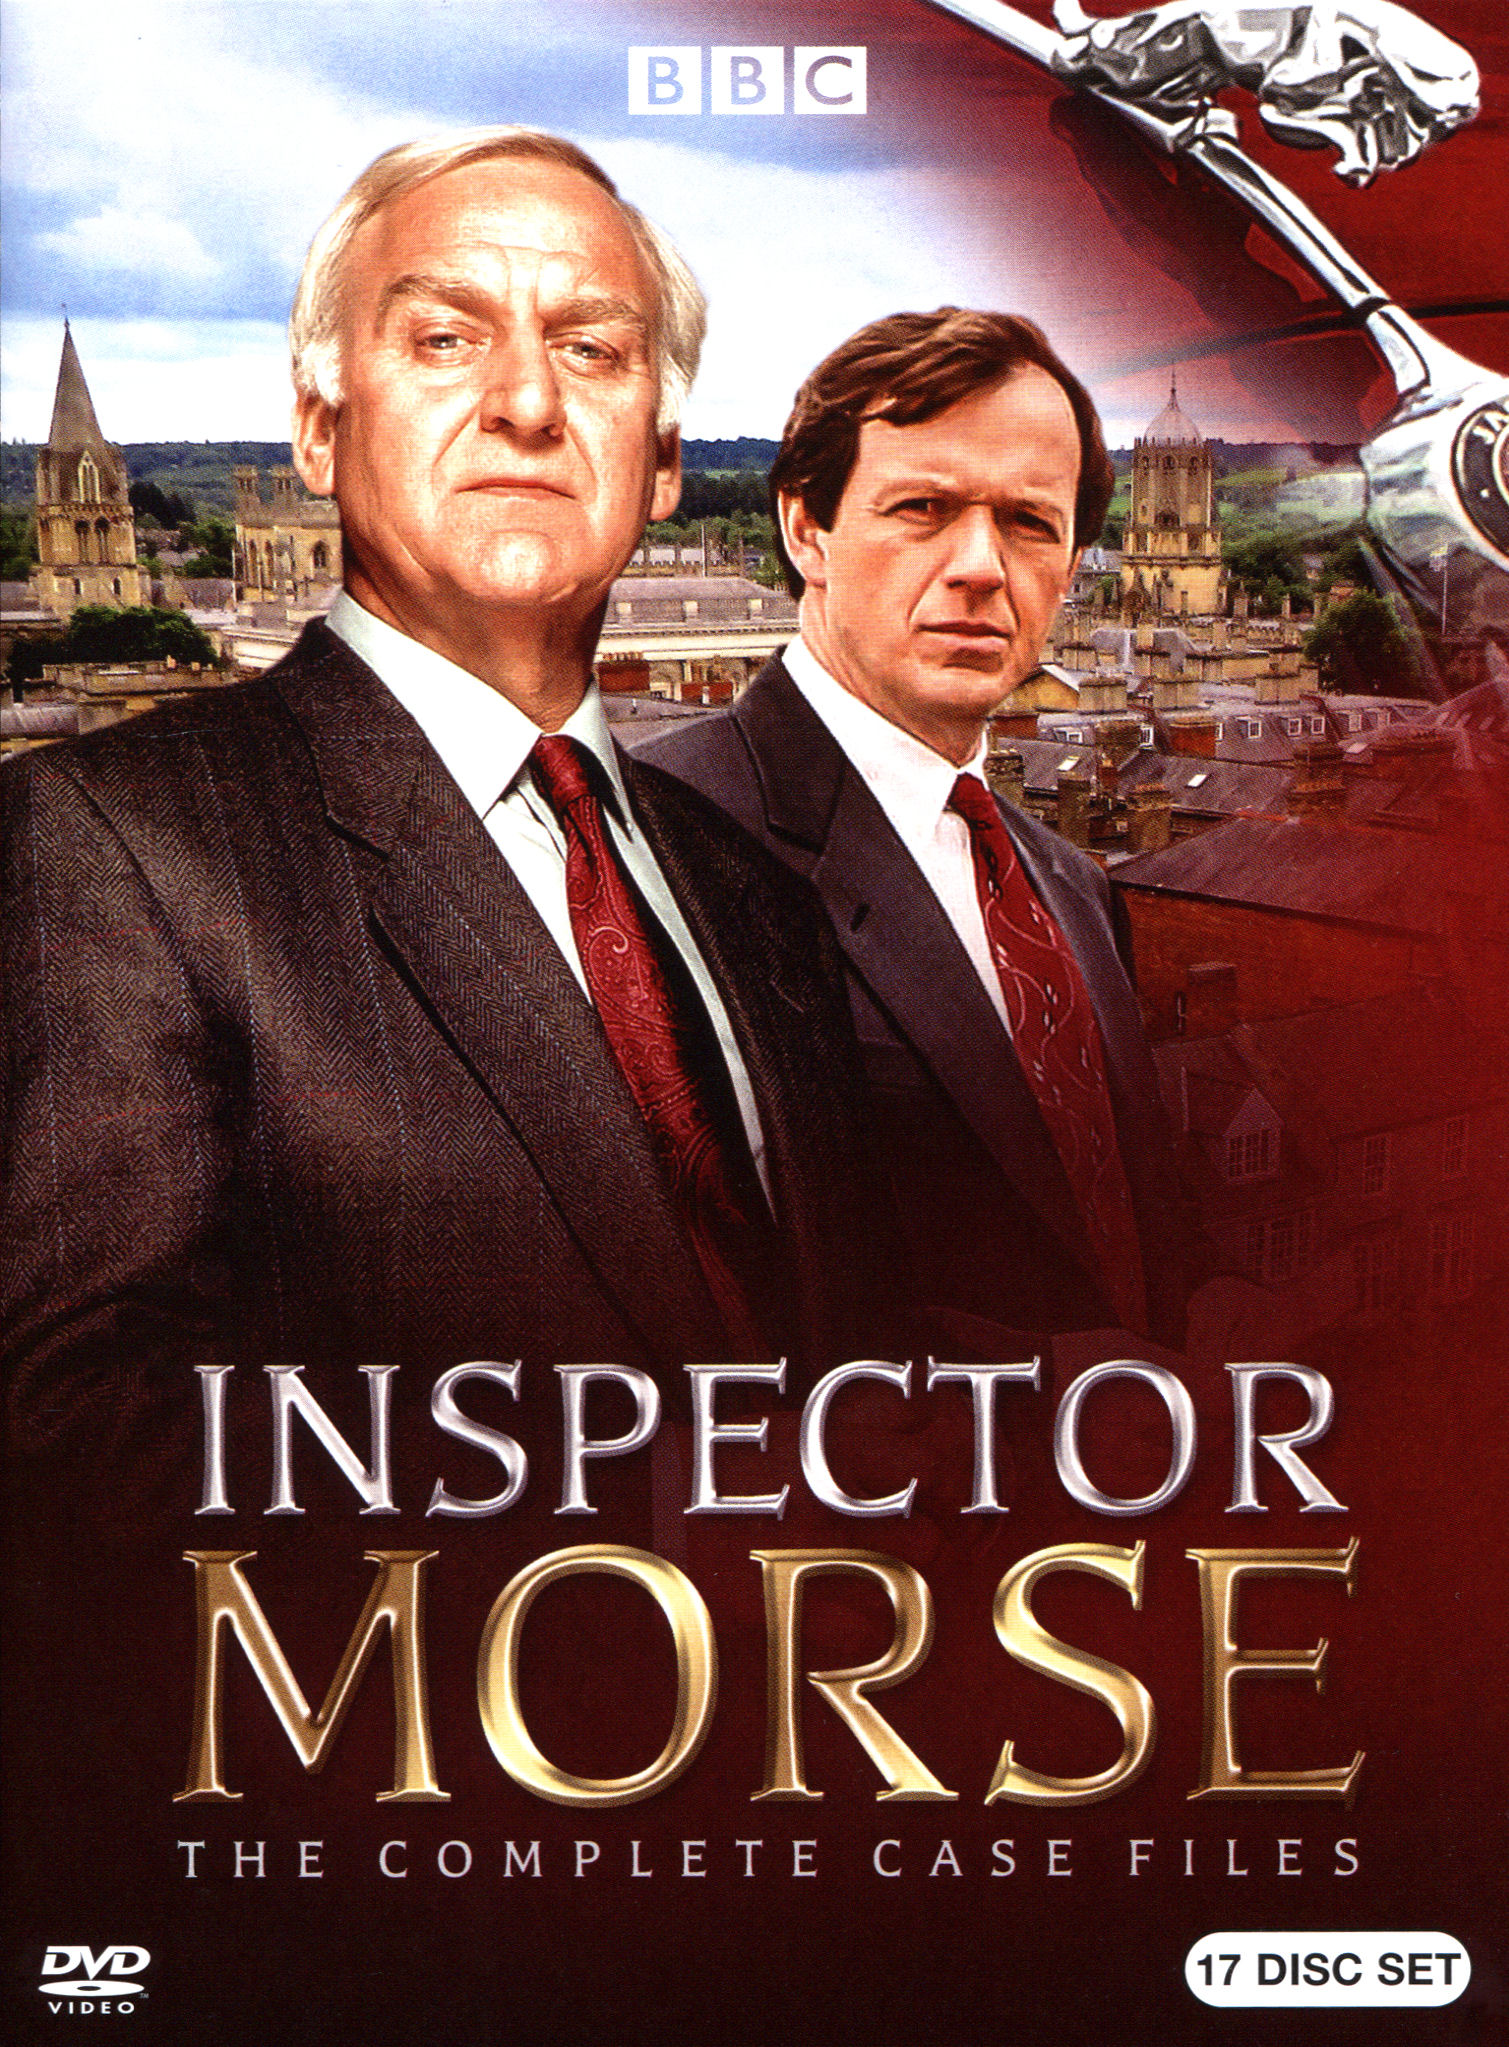 Inspector Morse DvD 13